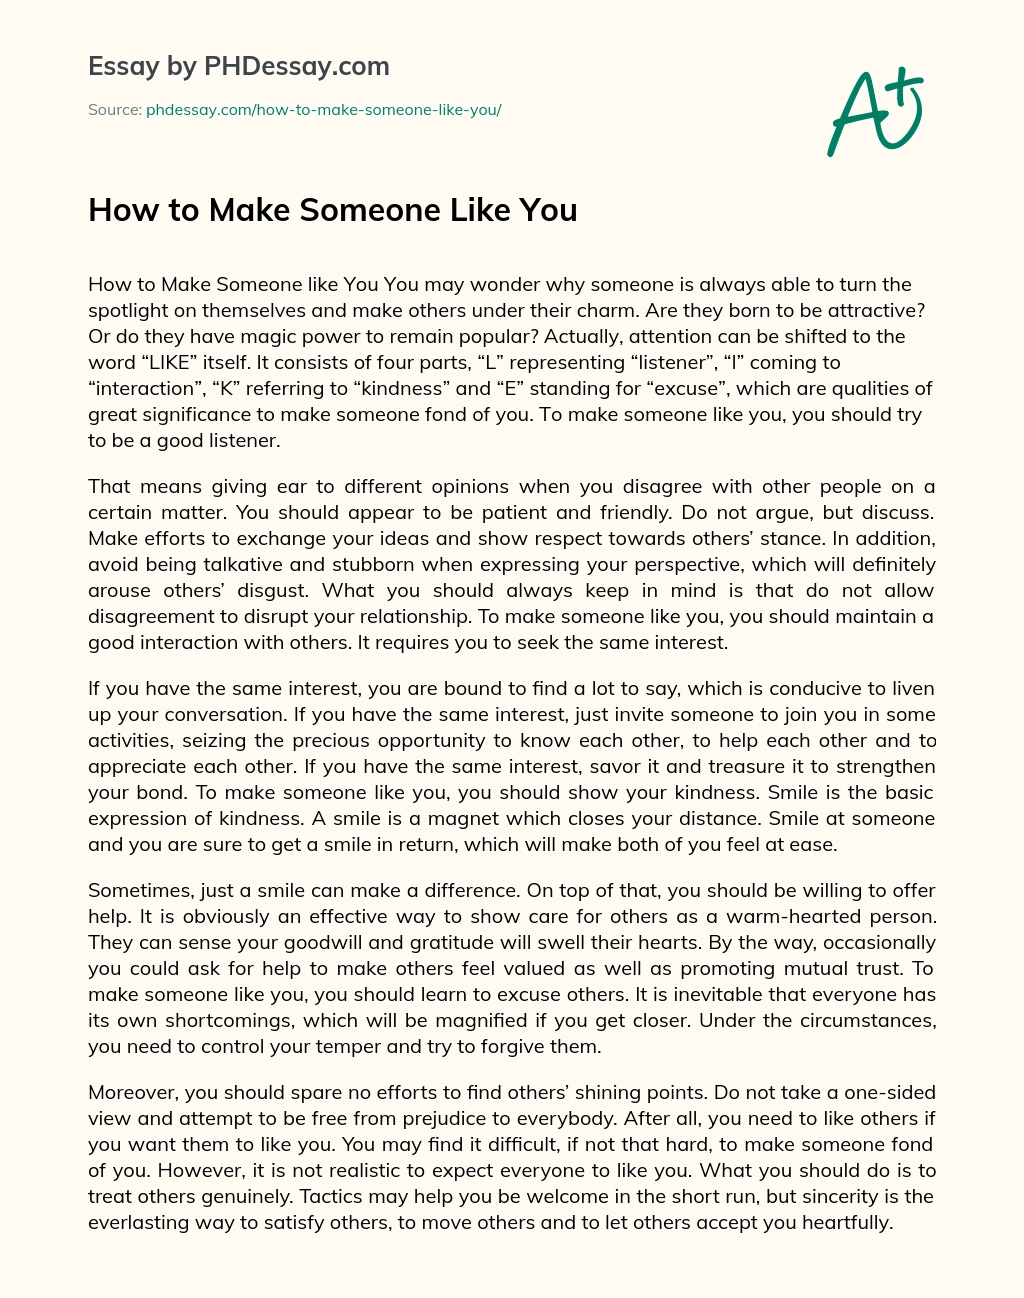 How to Make Someone Like You essay